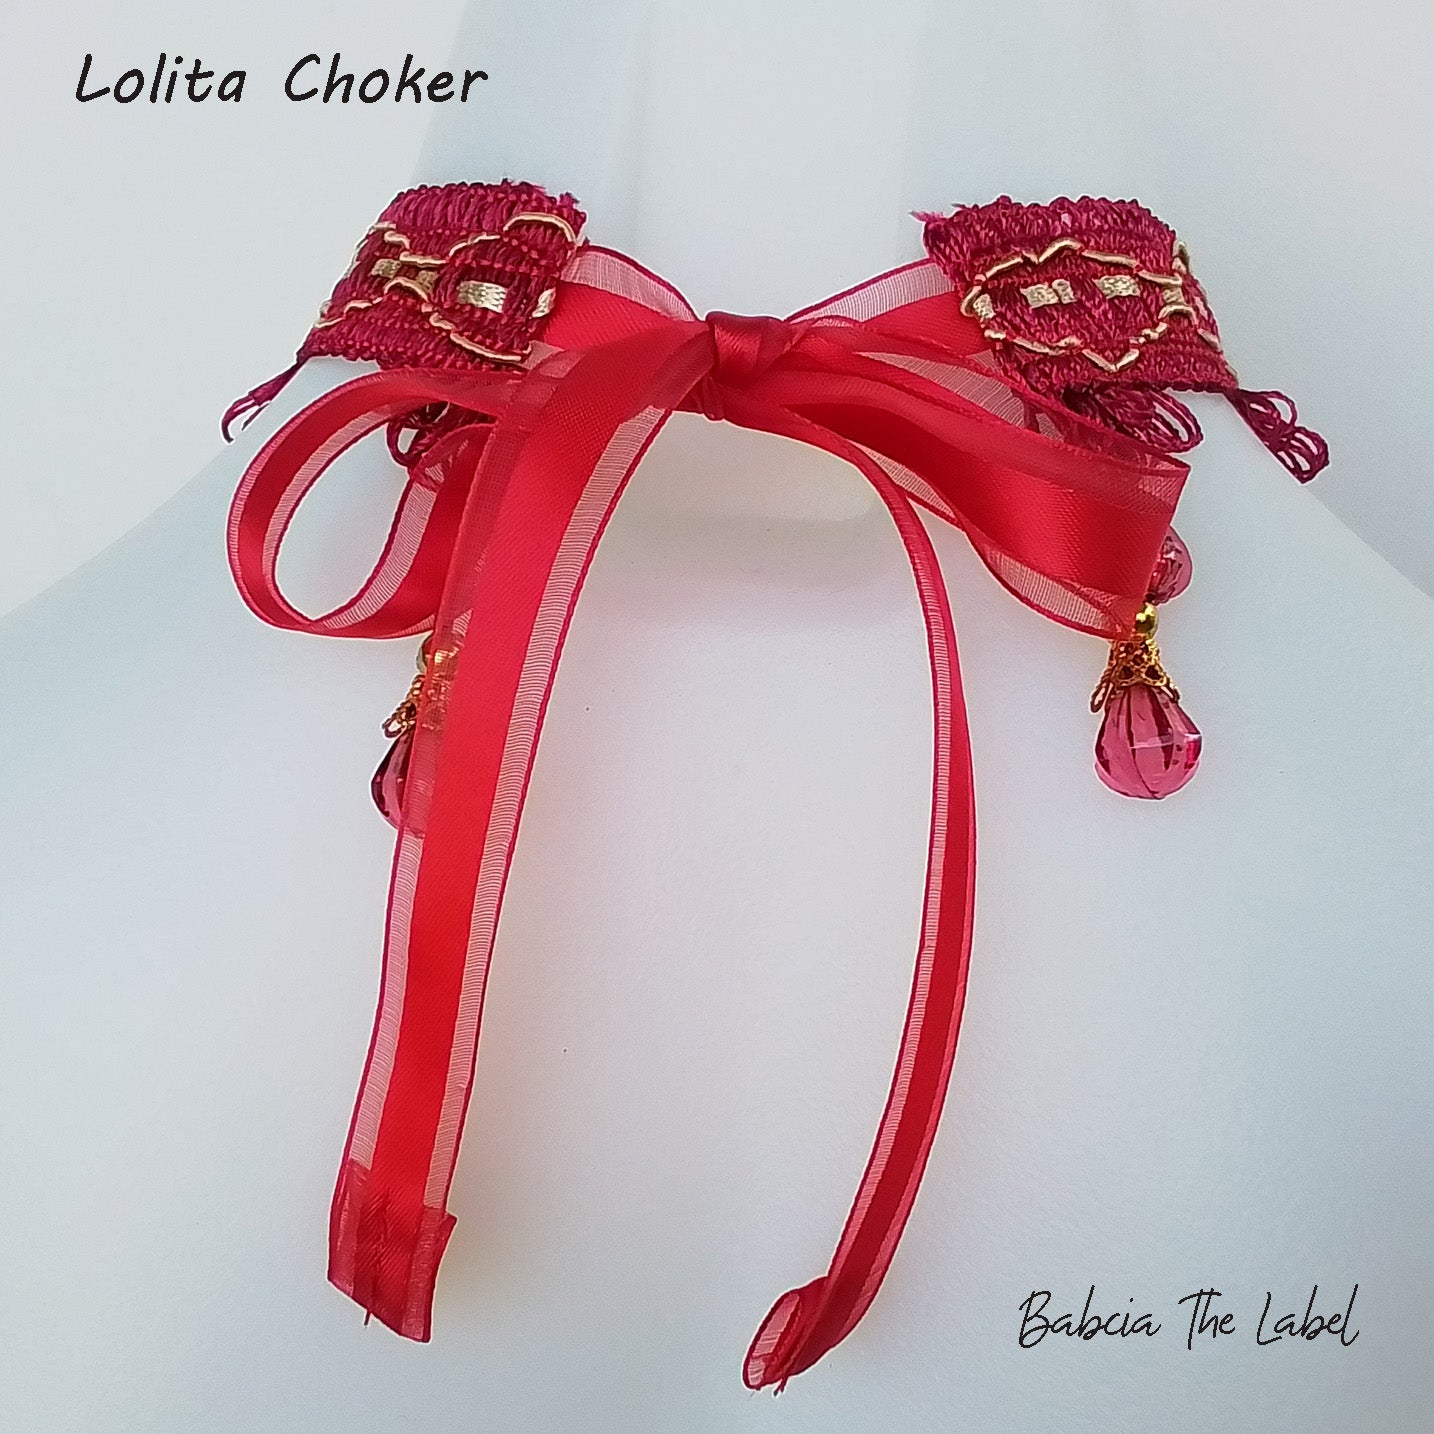 Lolita Choker